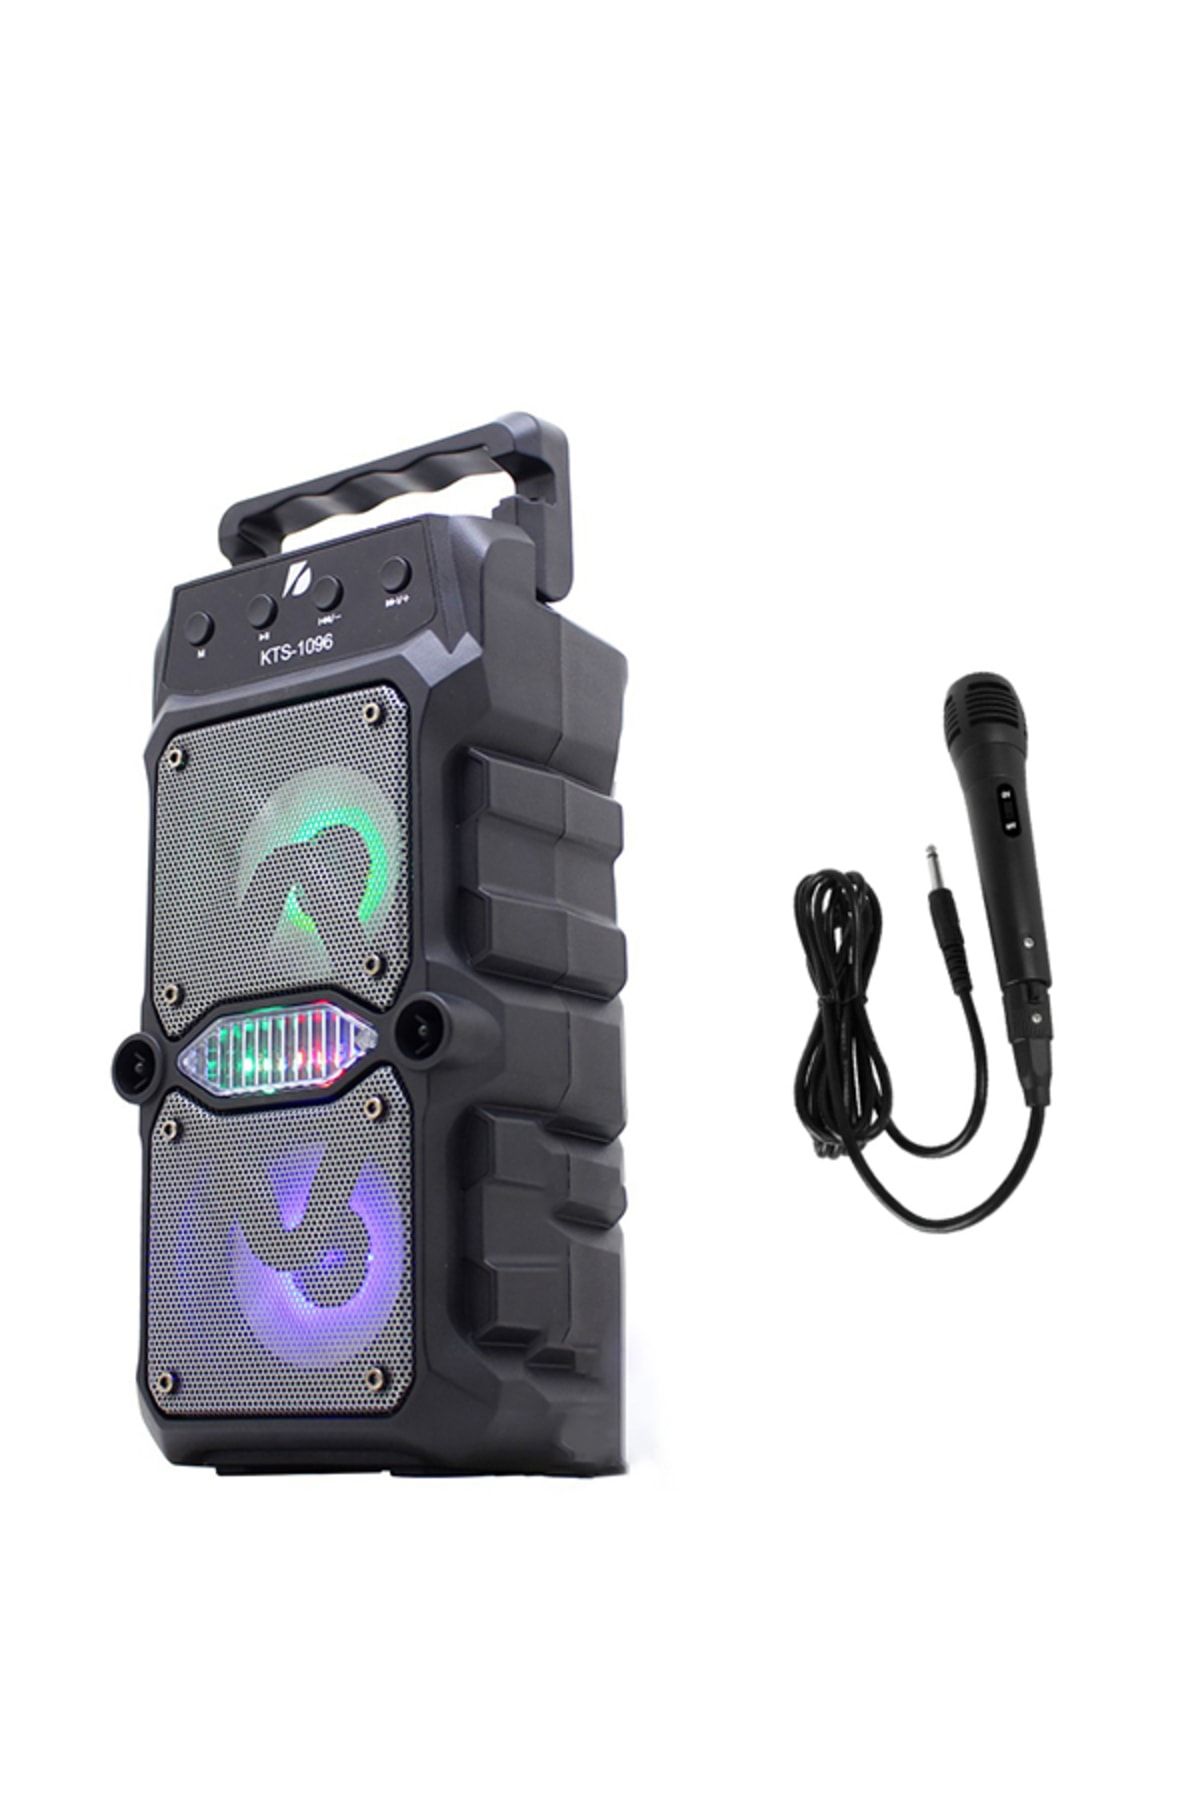 OWWOTECH Kts 1096 Işıklı Mikrofonlu Outdoor Parti Hoparlörü Bluetooth Hoparlör 3 Inç × 2 Kablosuz Speaker